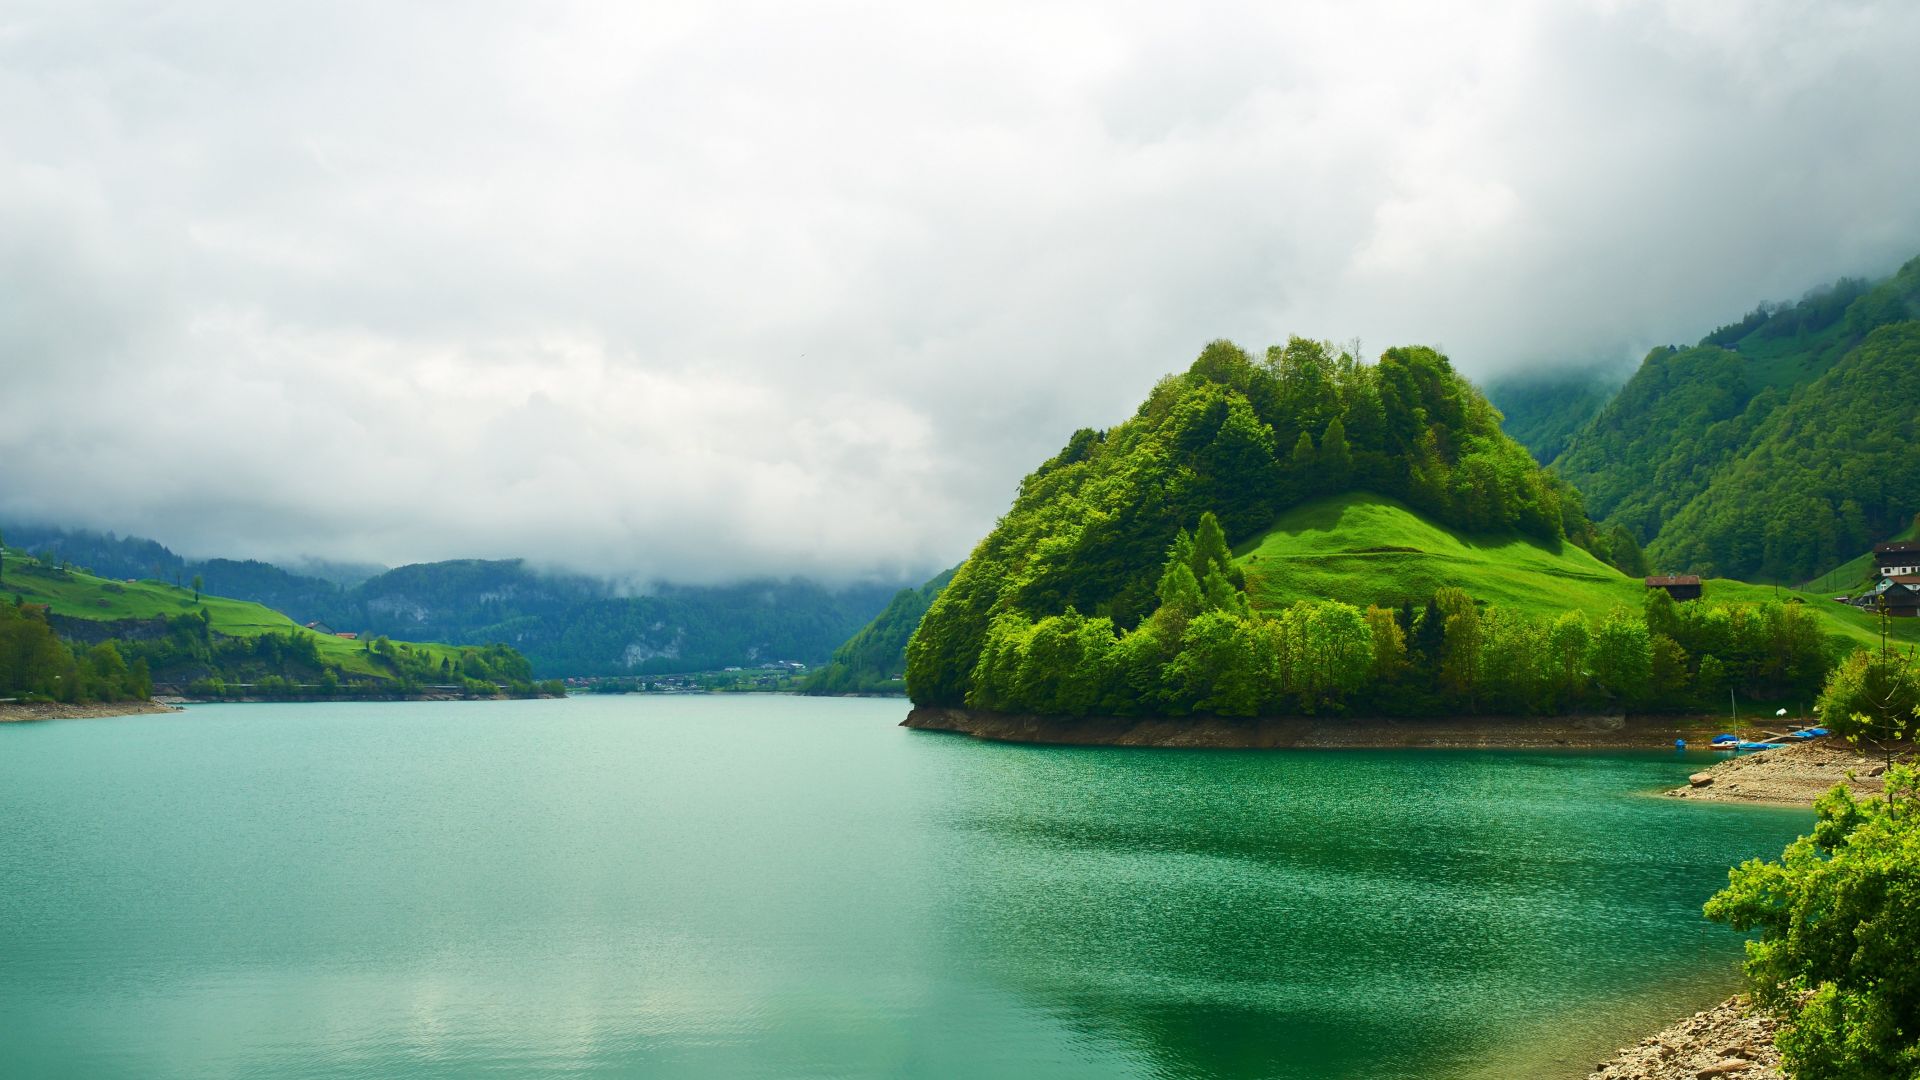 Desktop Wallpaper Switzerland's Emerald Mountain, Lake, Landscape, Beautiful Nature, HD Image, Picture, Background, M Kmed